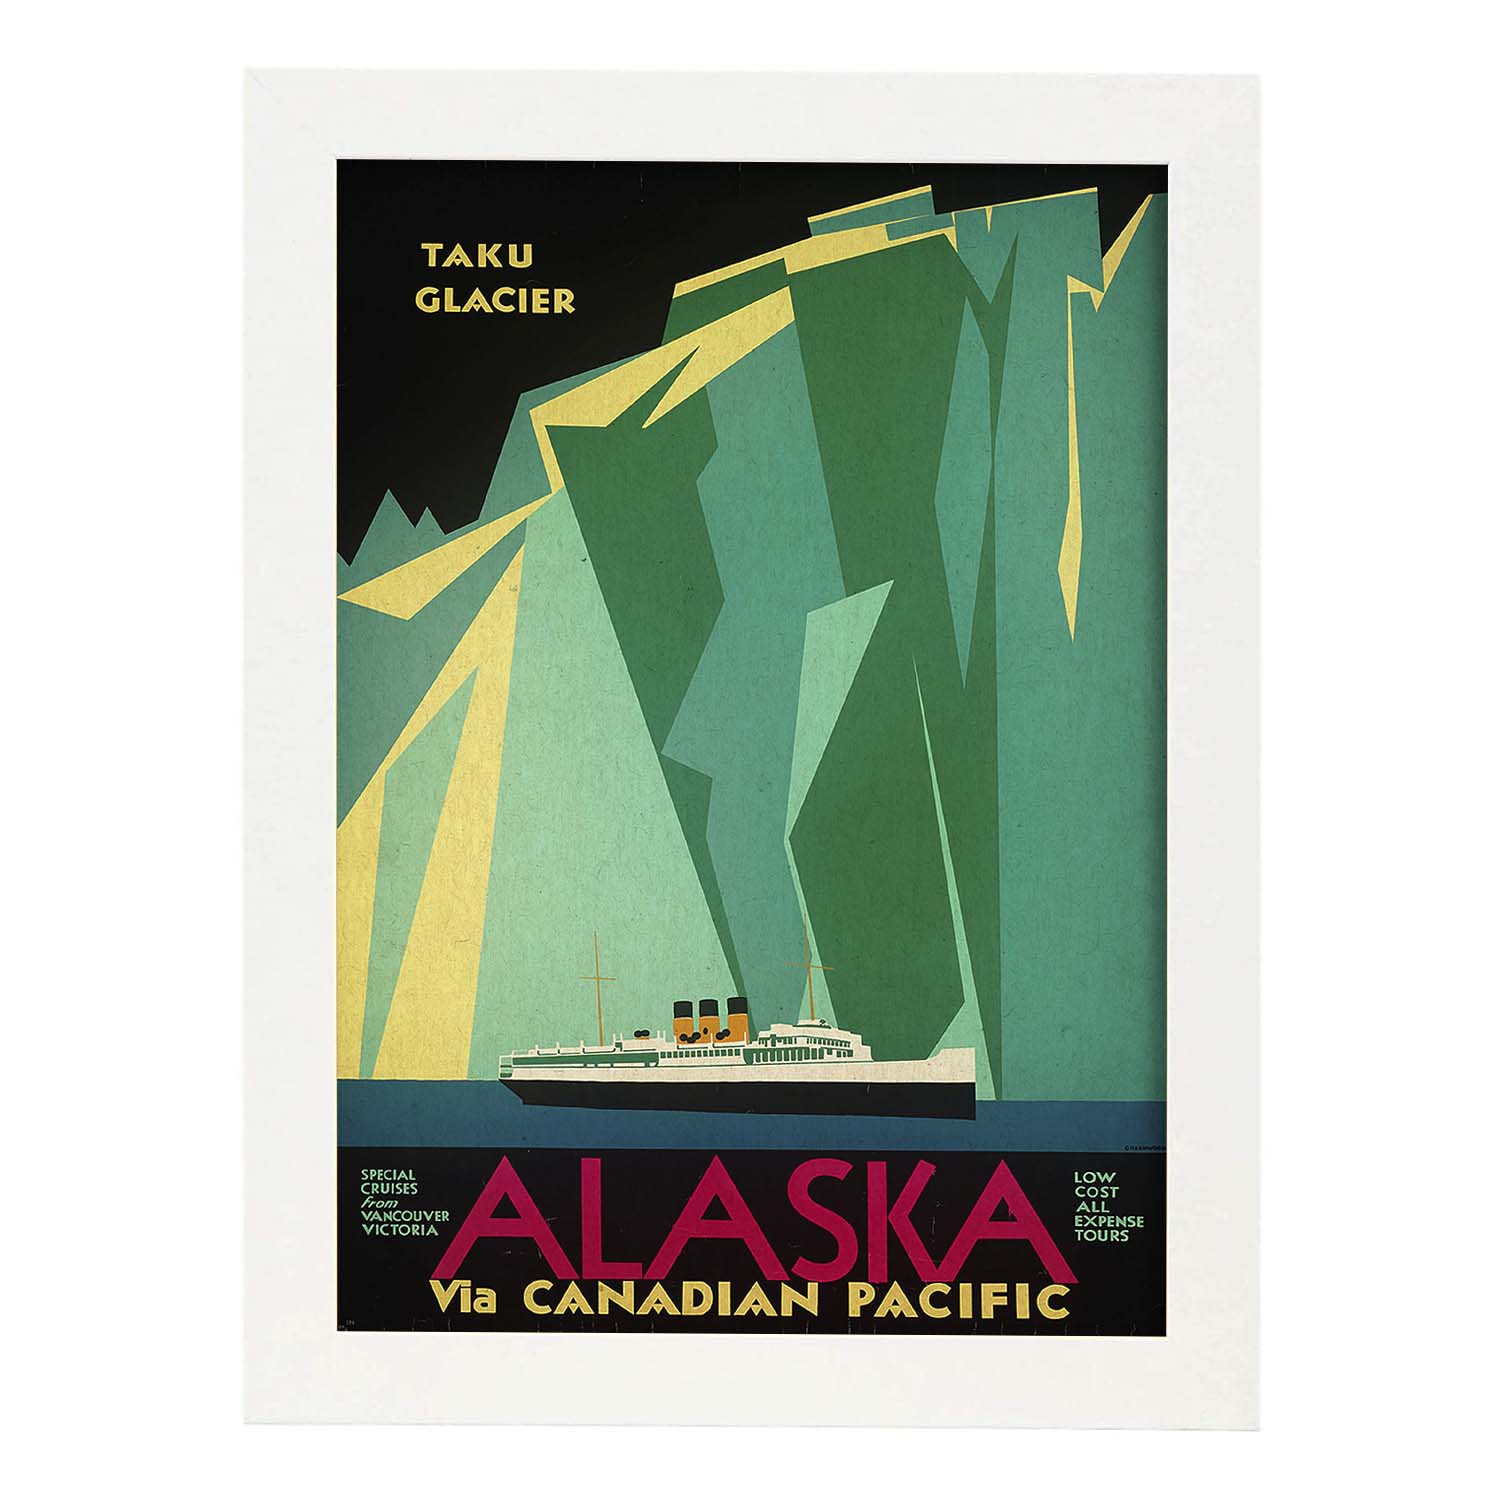 Poster vintage. Cartel vintage. Iceberg en Alaska.-Artwork-Nacnic-A3-Marco Blanco-Nacnic Estudio SL